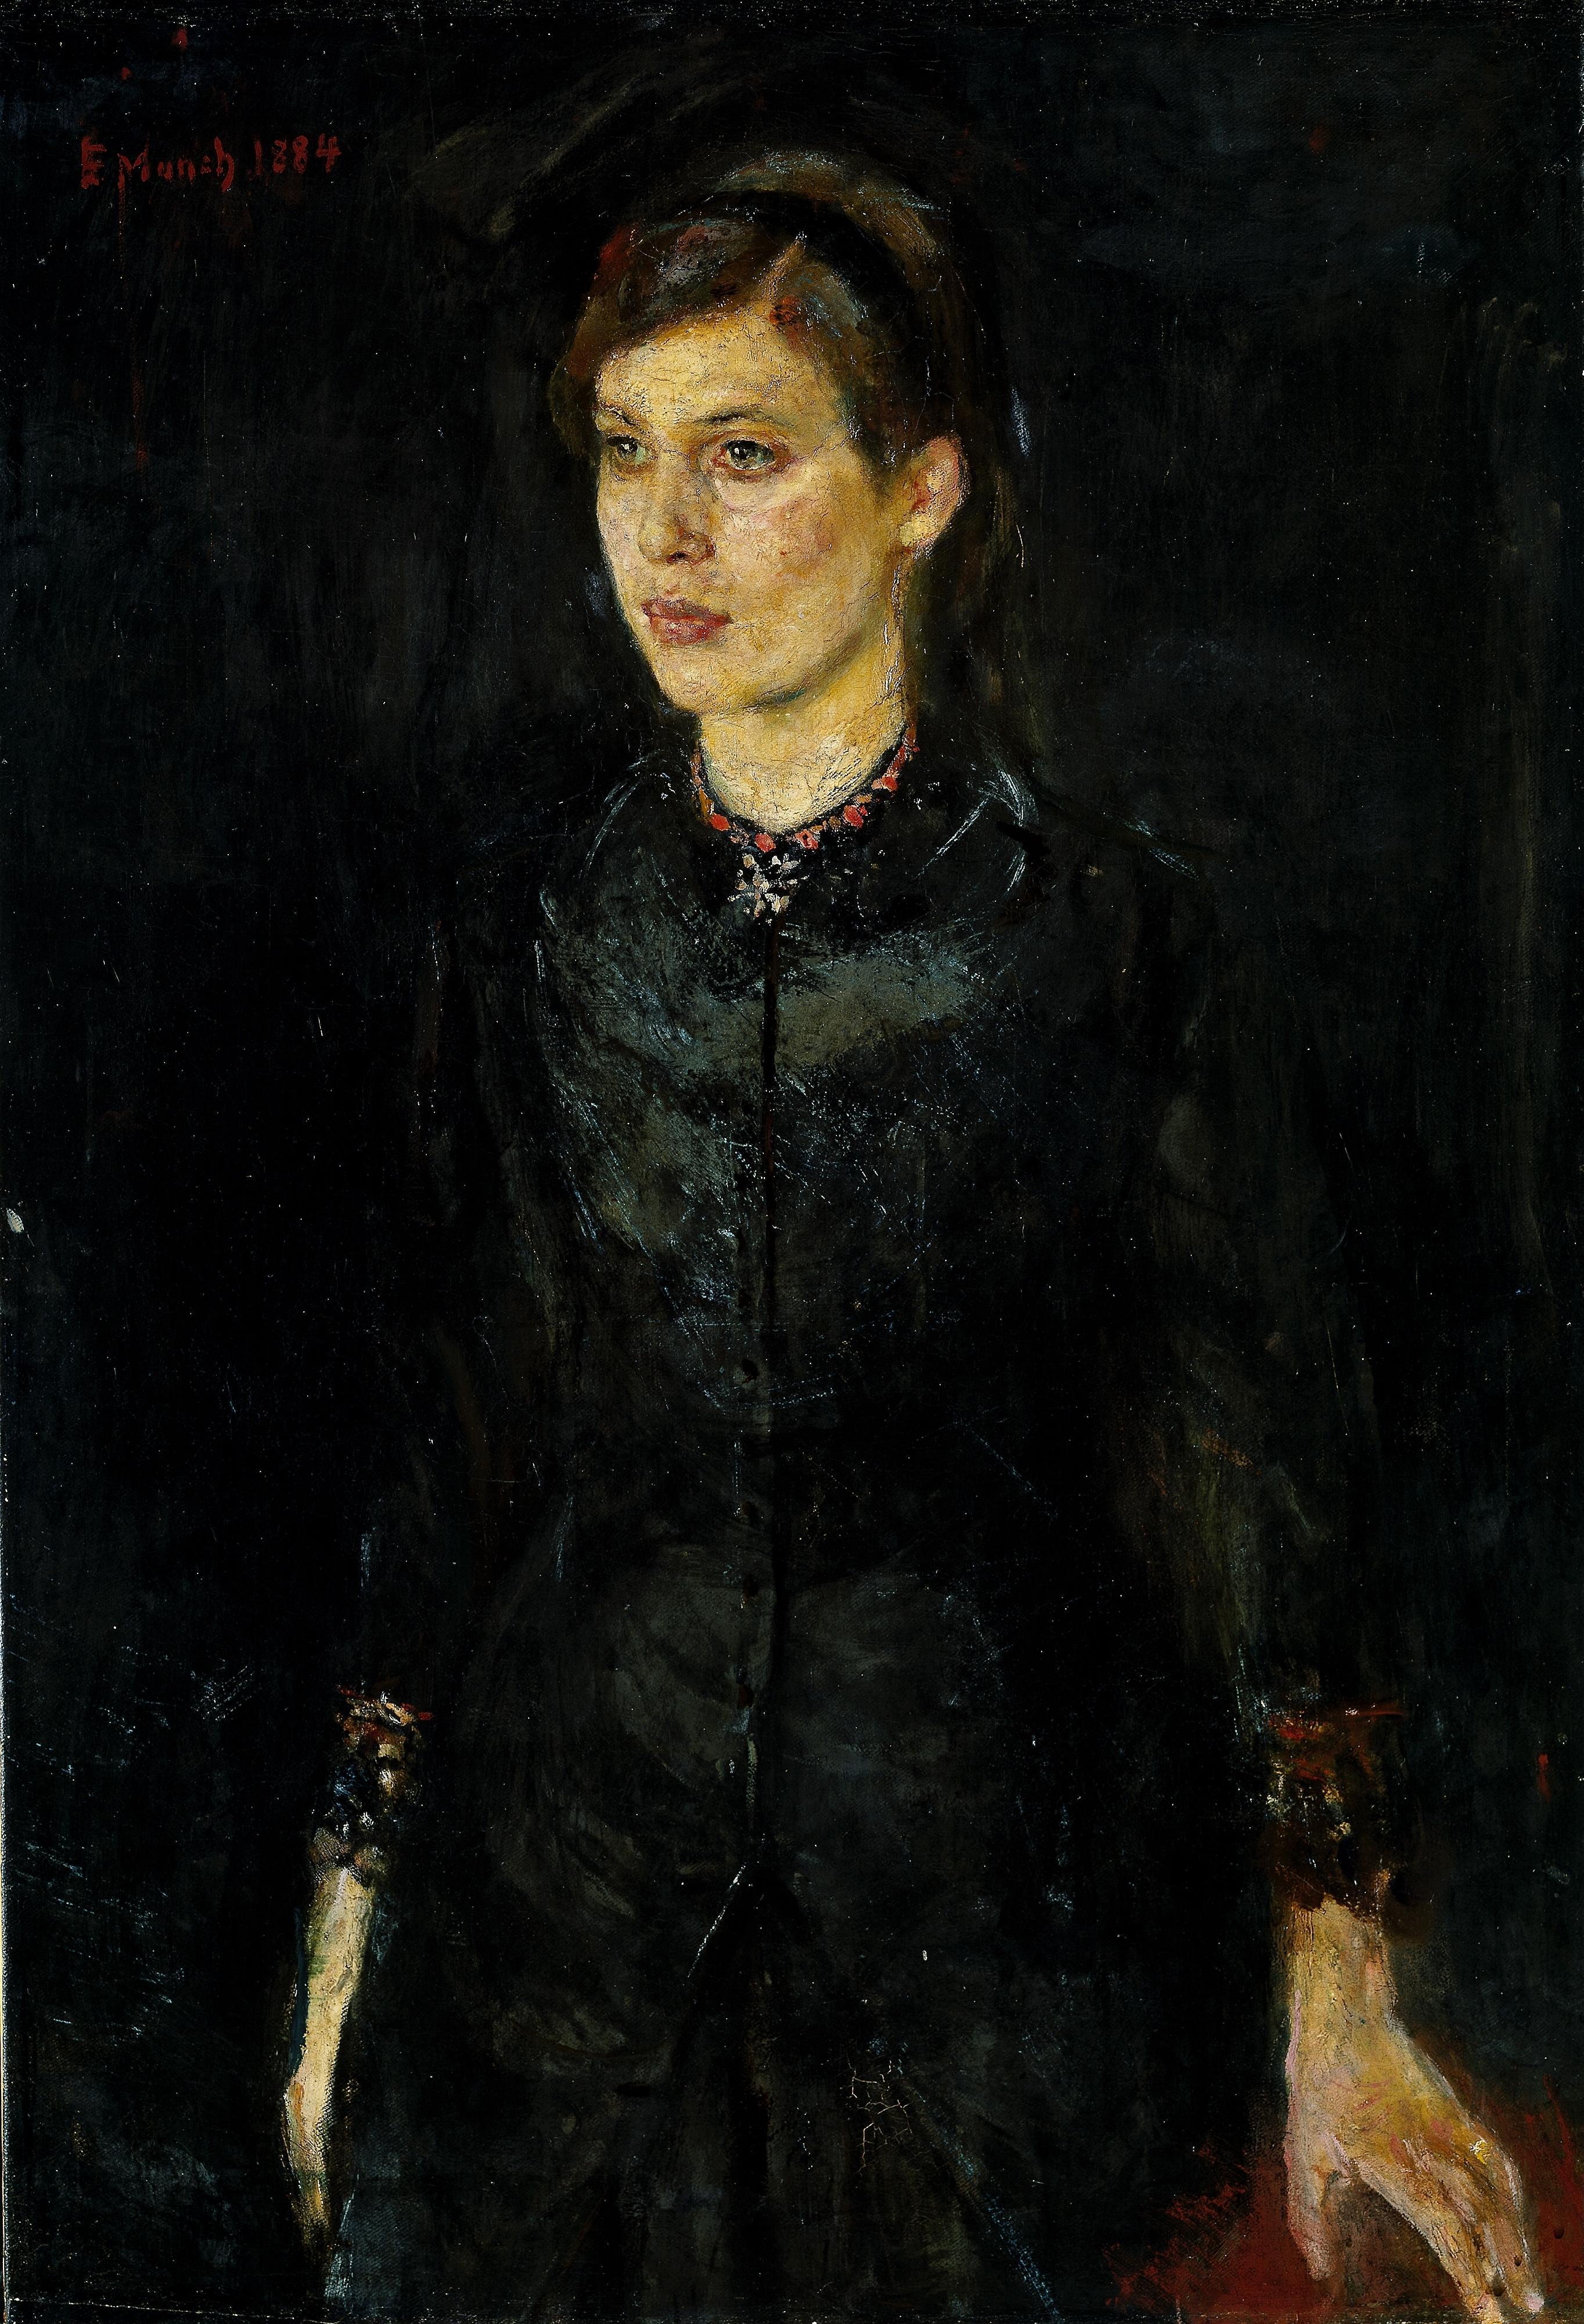 Inger în negru by Edvard Munch - 1884 - 97 x 67 cm 